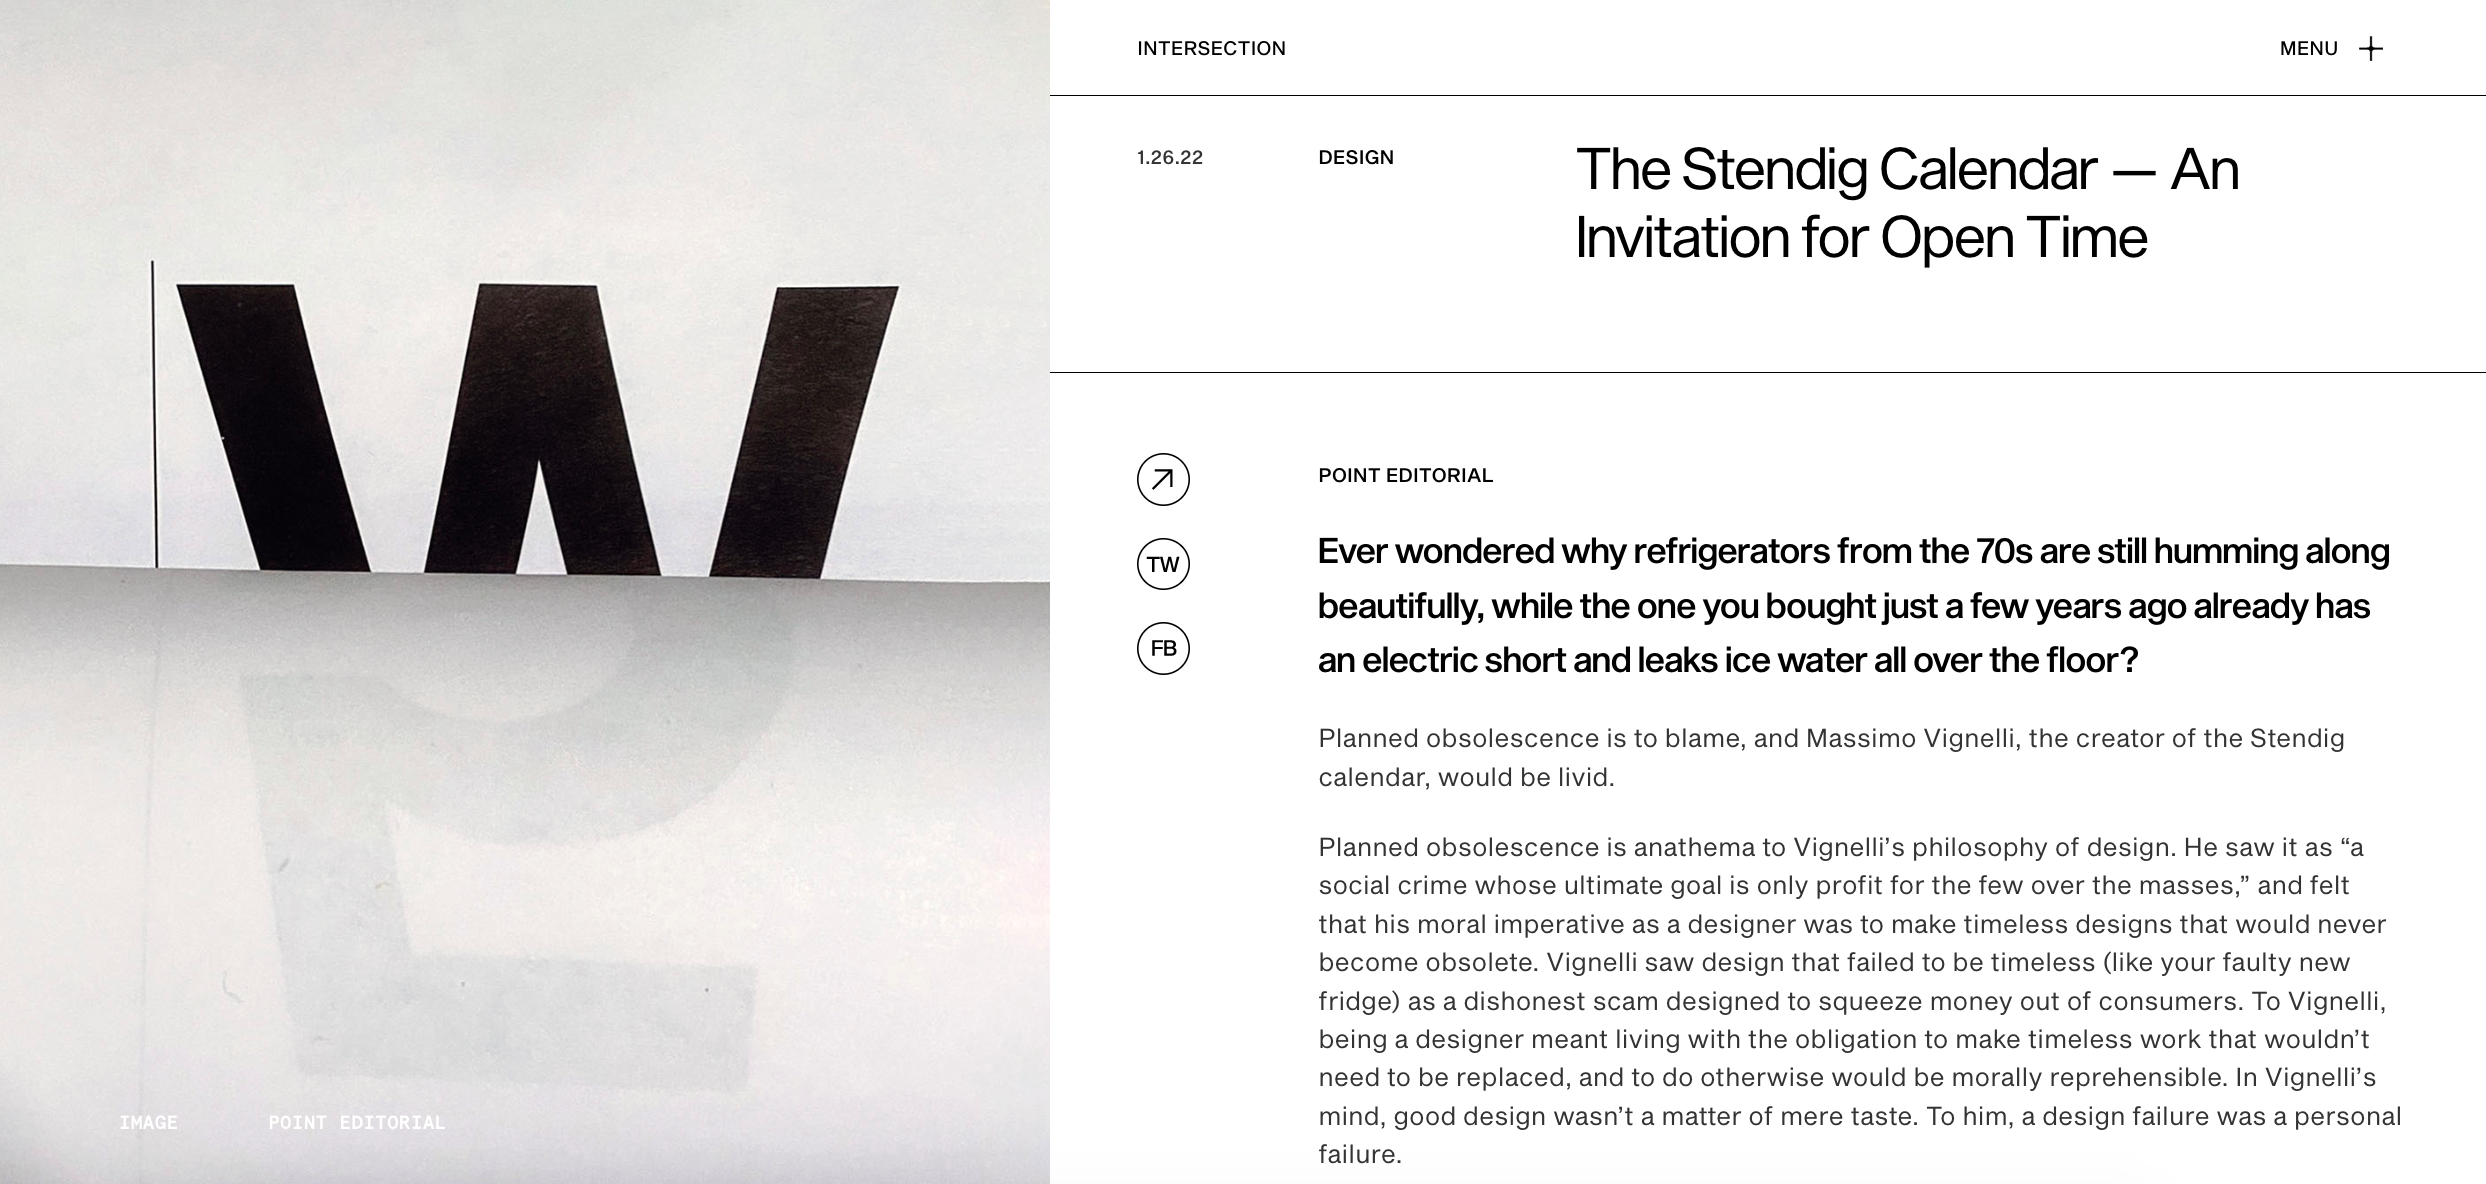 The Stendig Calendar — An Invitation for Open Time